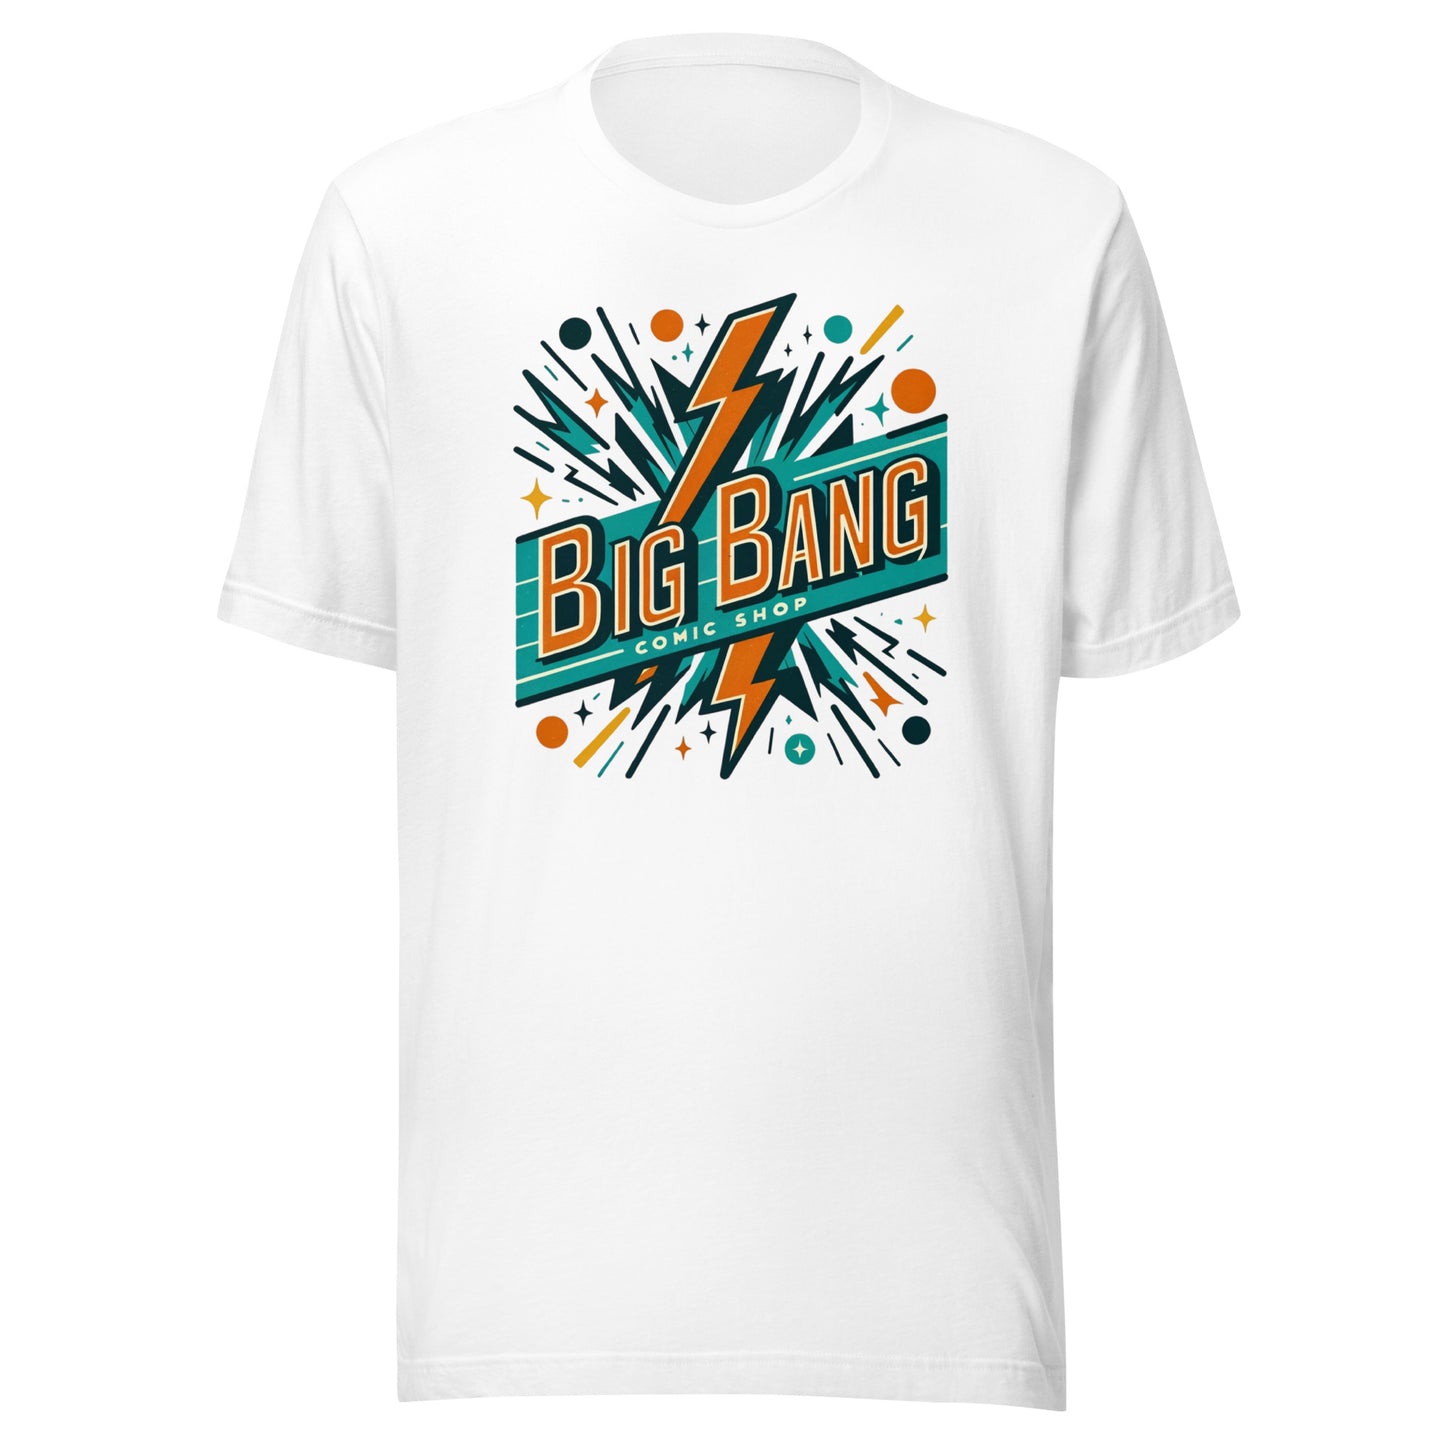 Big Bang Comic Shop - Your Ultimate Destination for Comics Unisex t-shirt